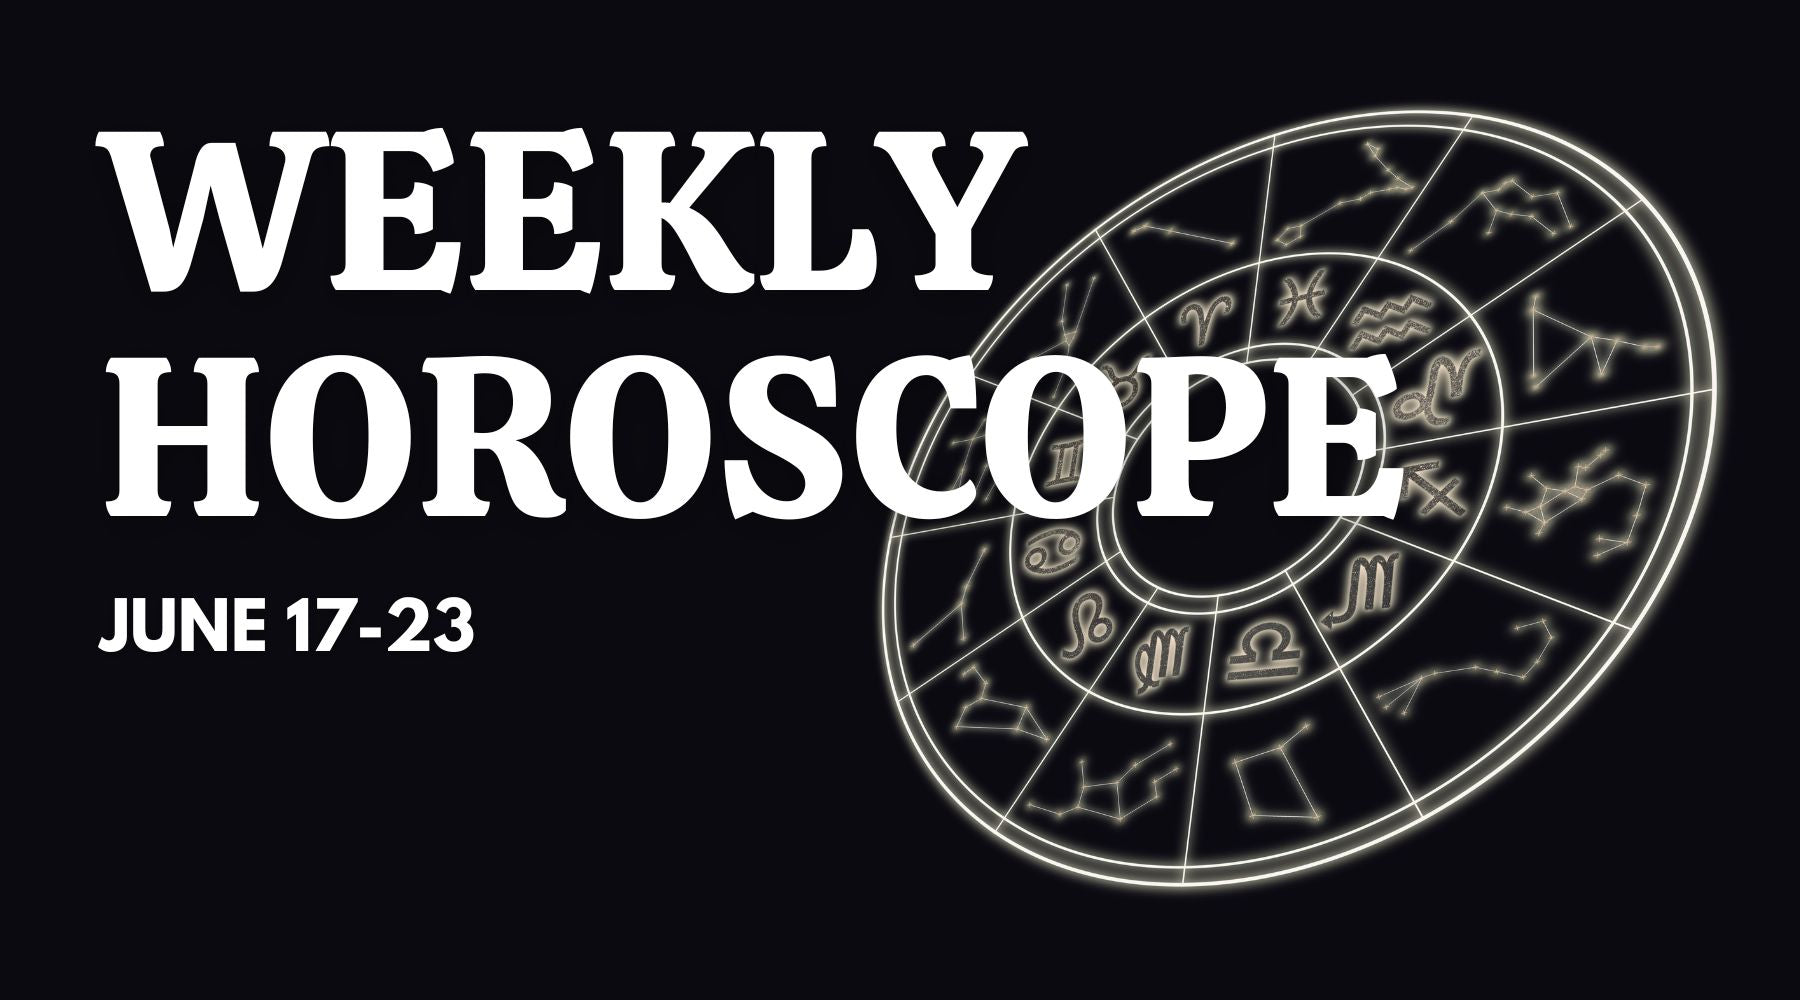 Weekly Horoscope: June 17 - June 23